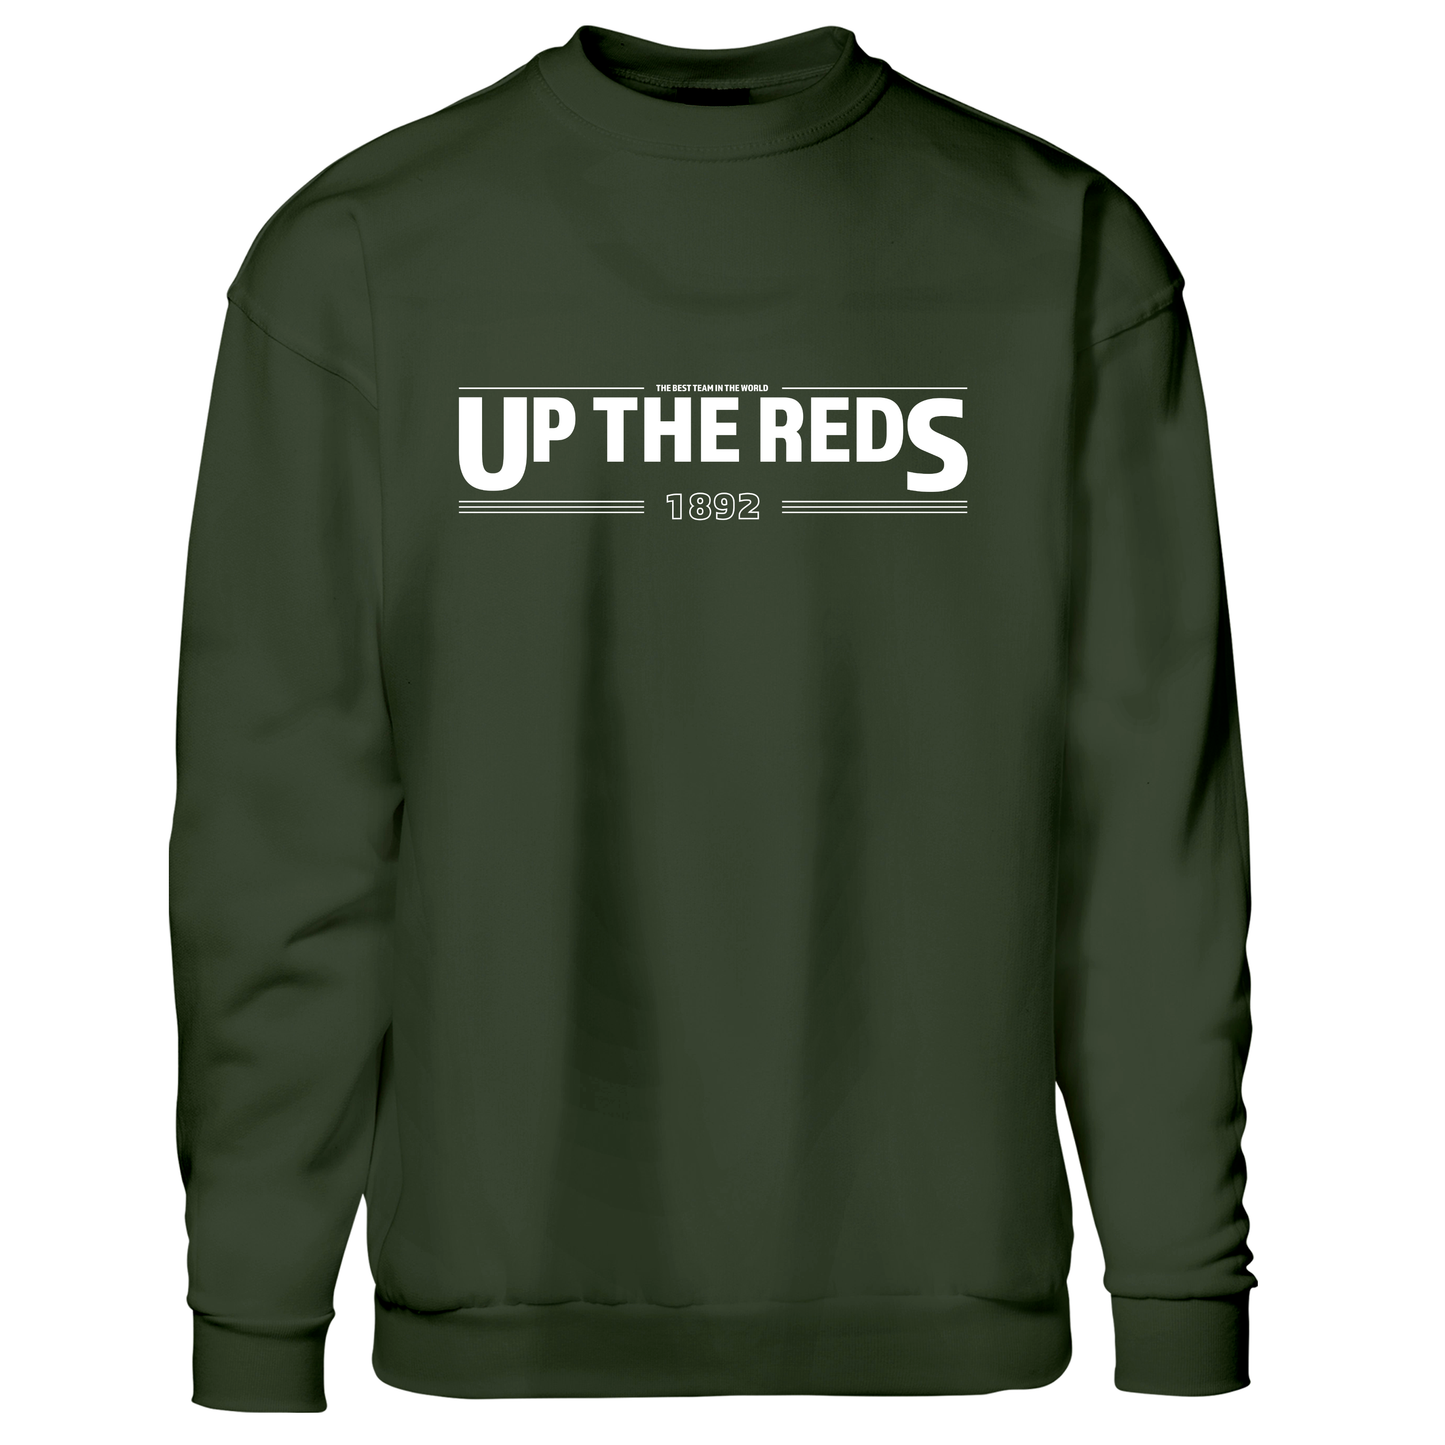 UP THE REDS - Sweatshirt